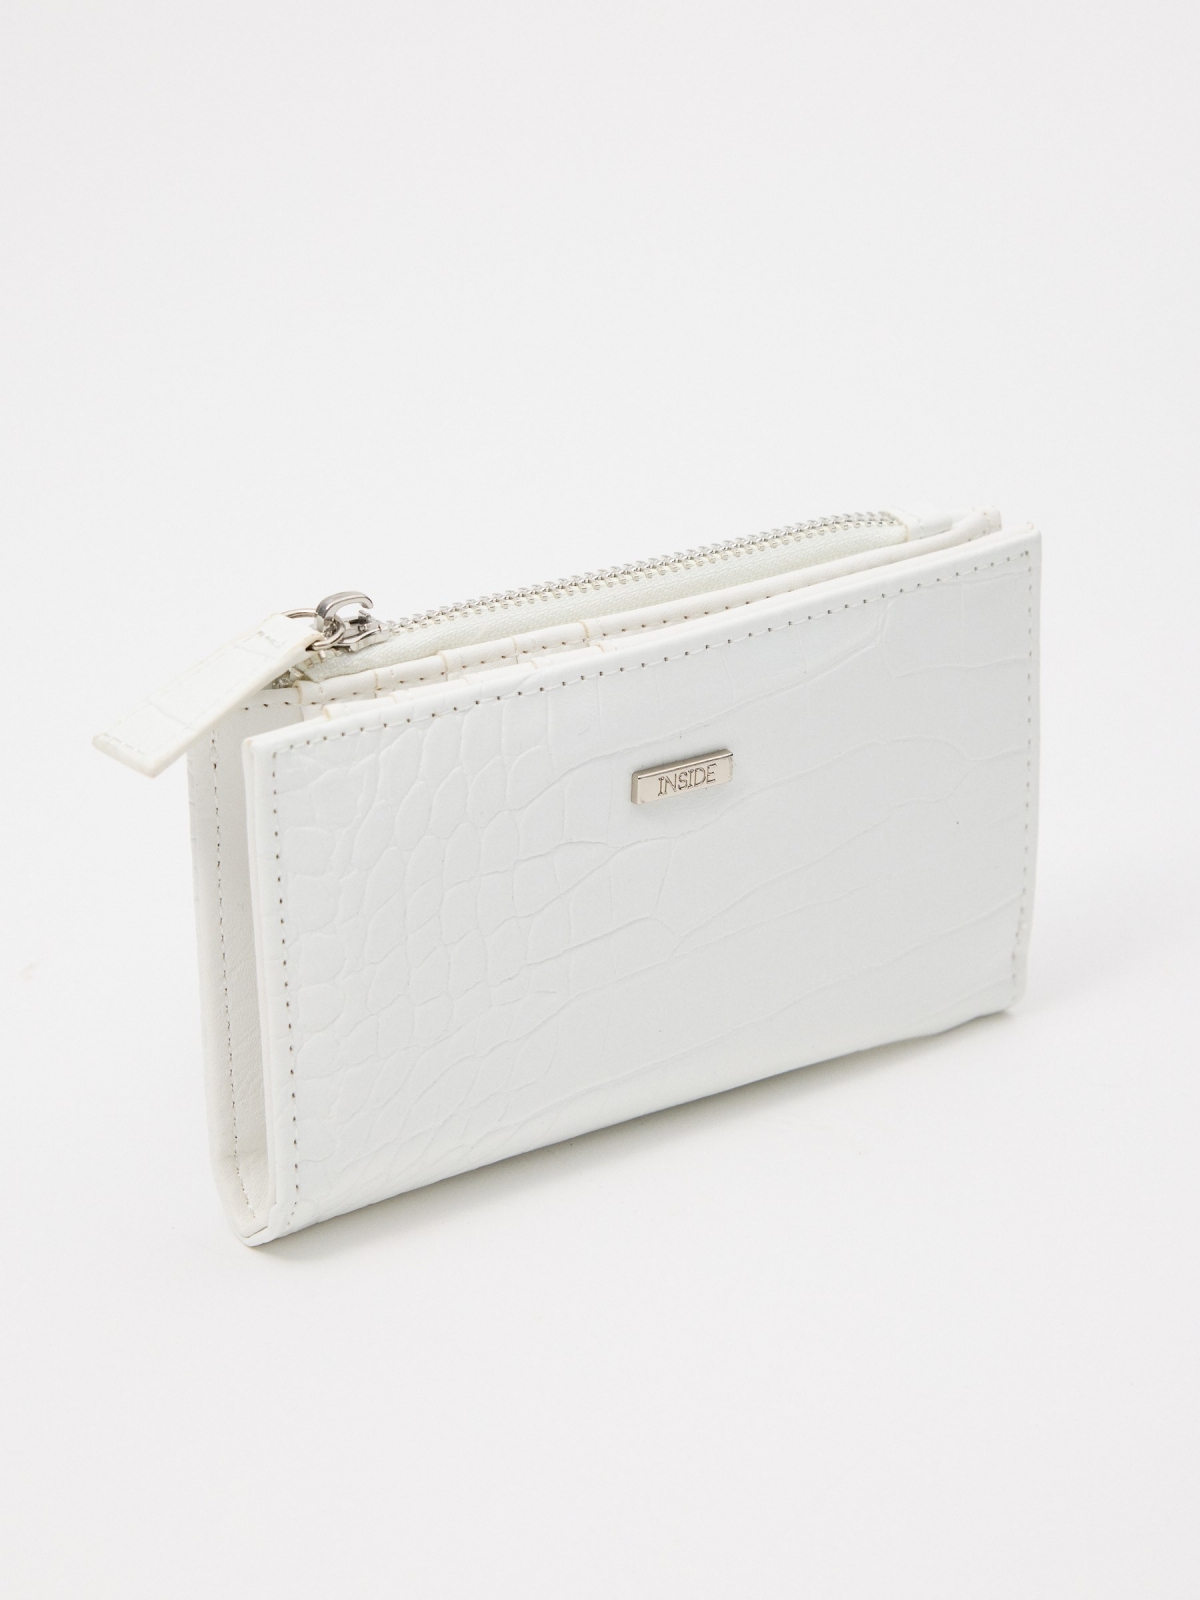 White leatherette purse white back view